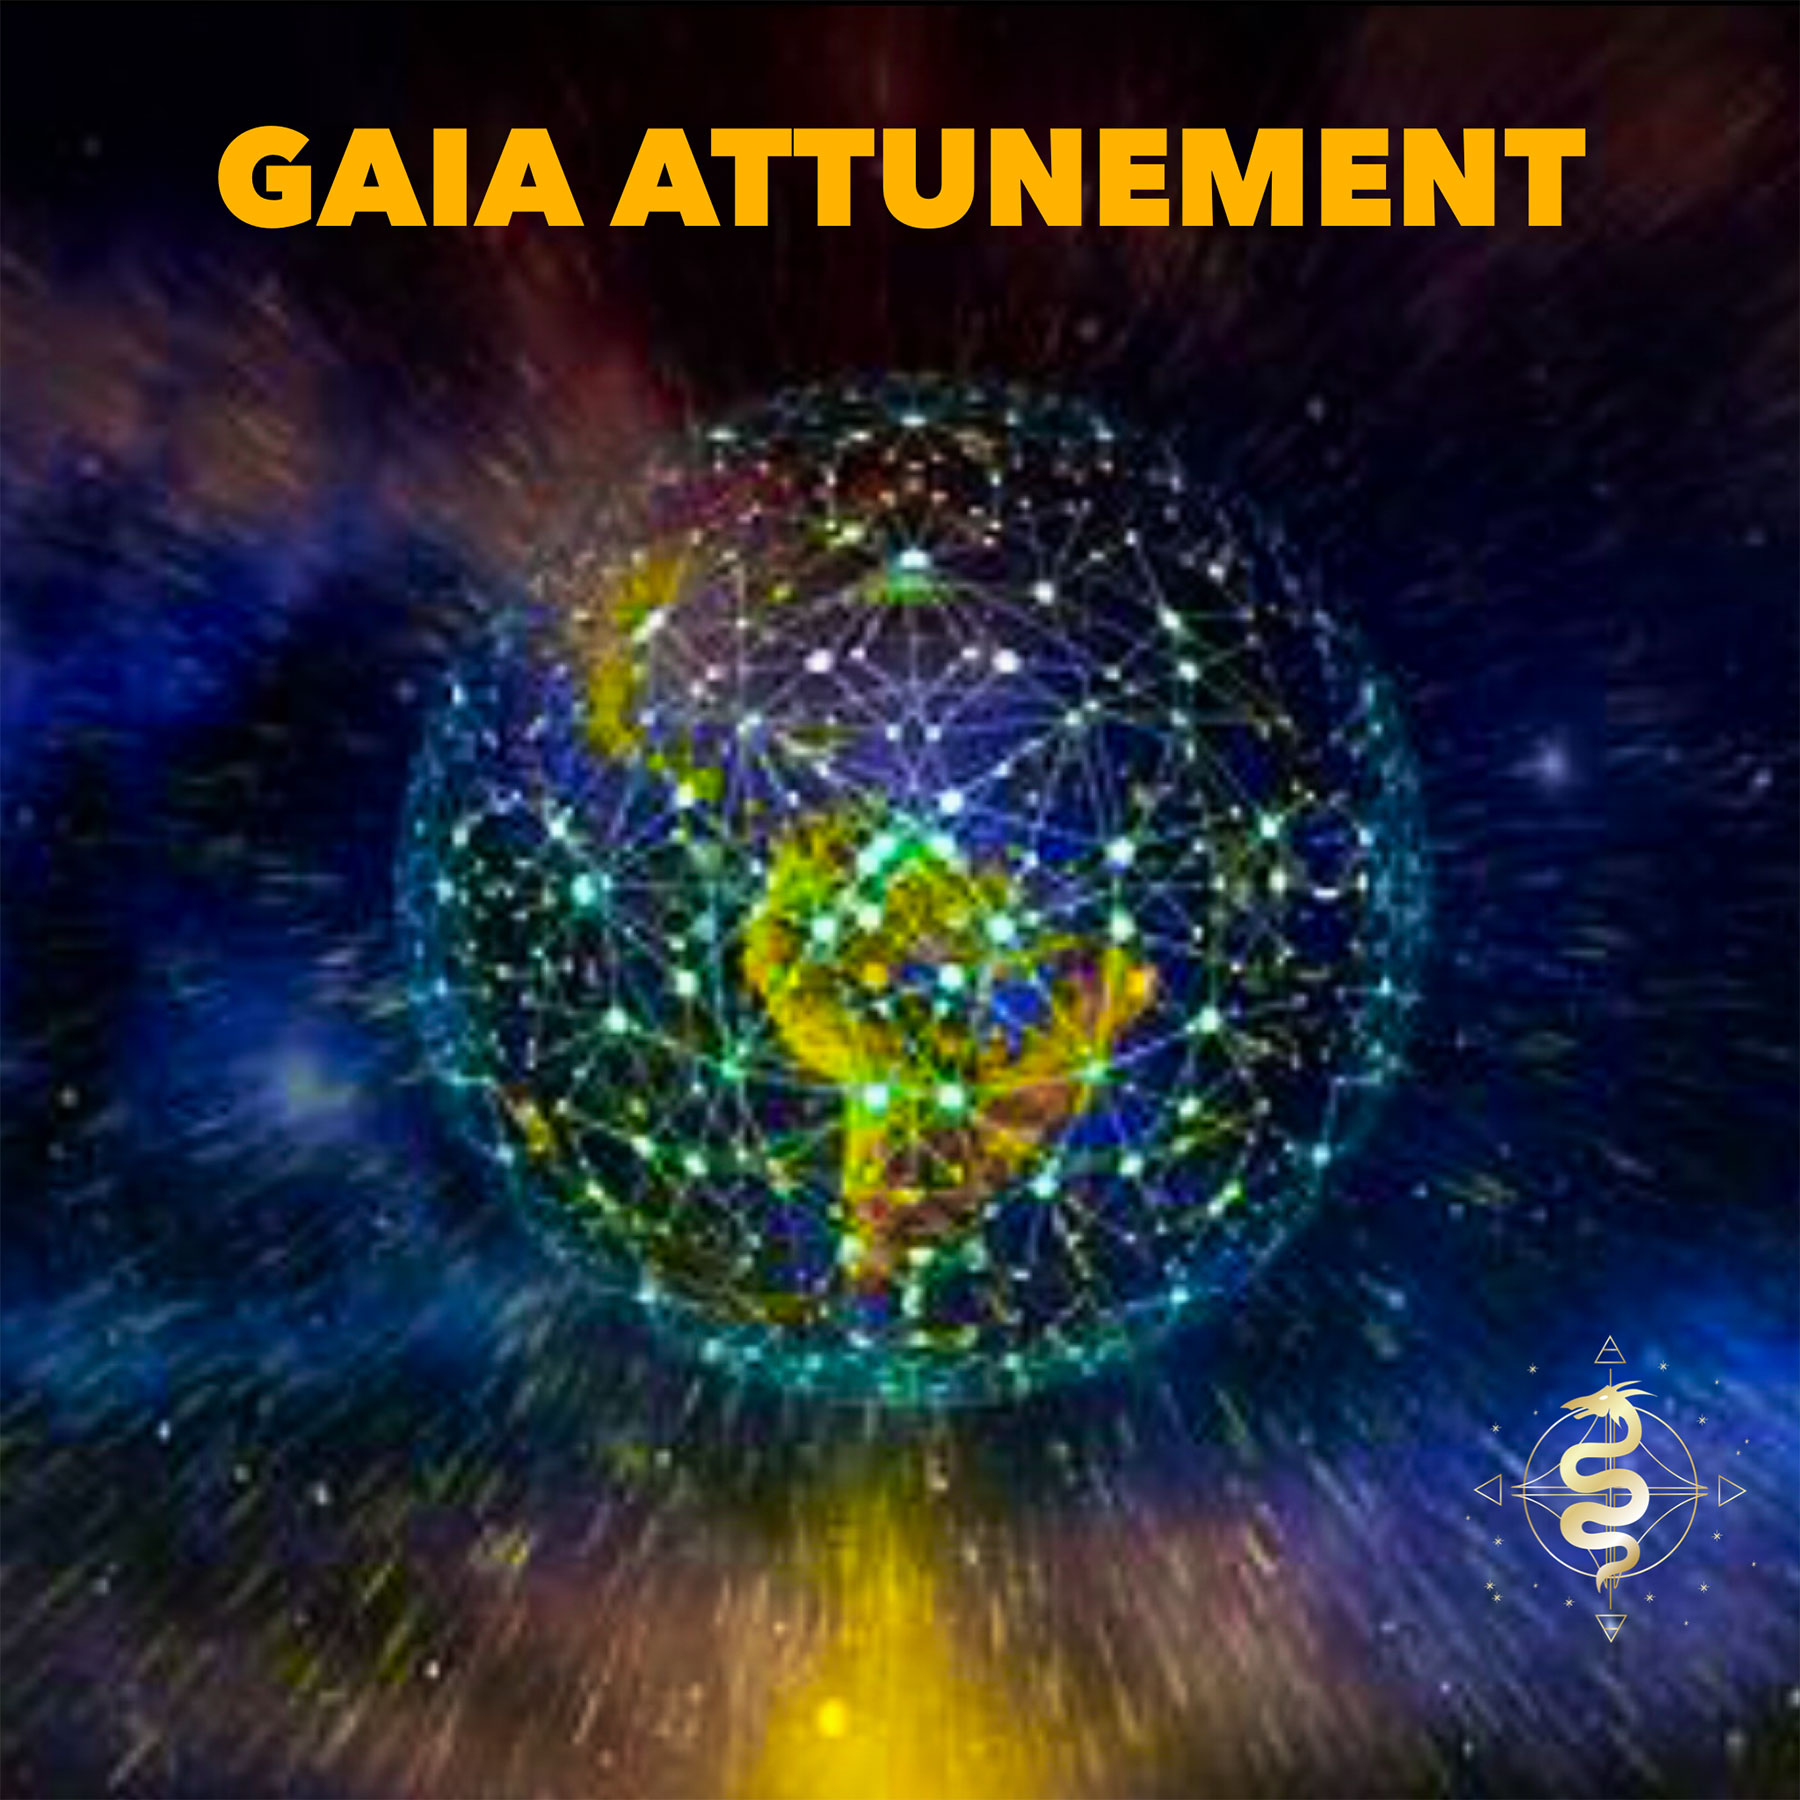 Gaia attunement with Susie Sith